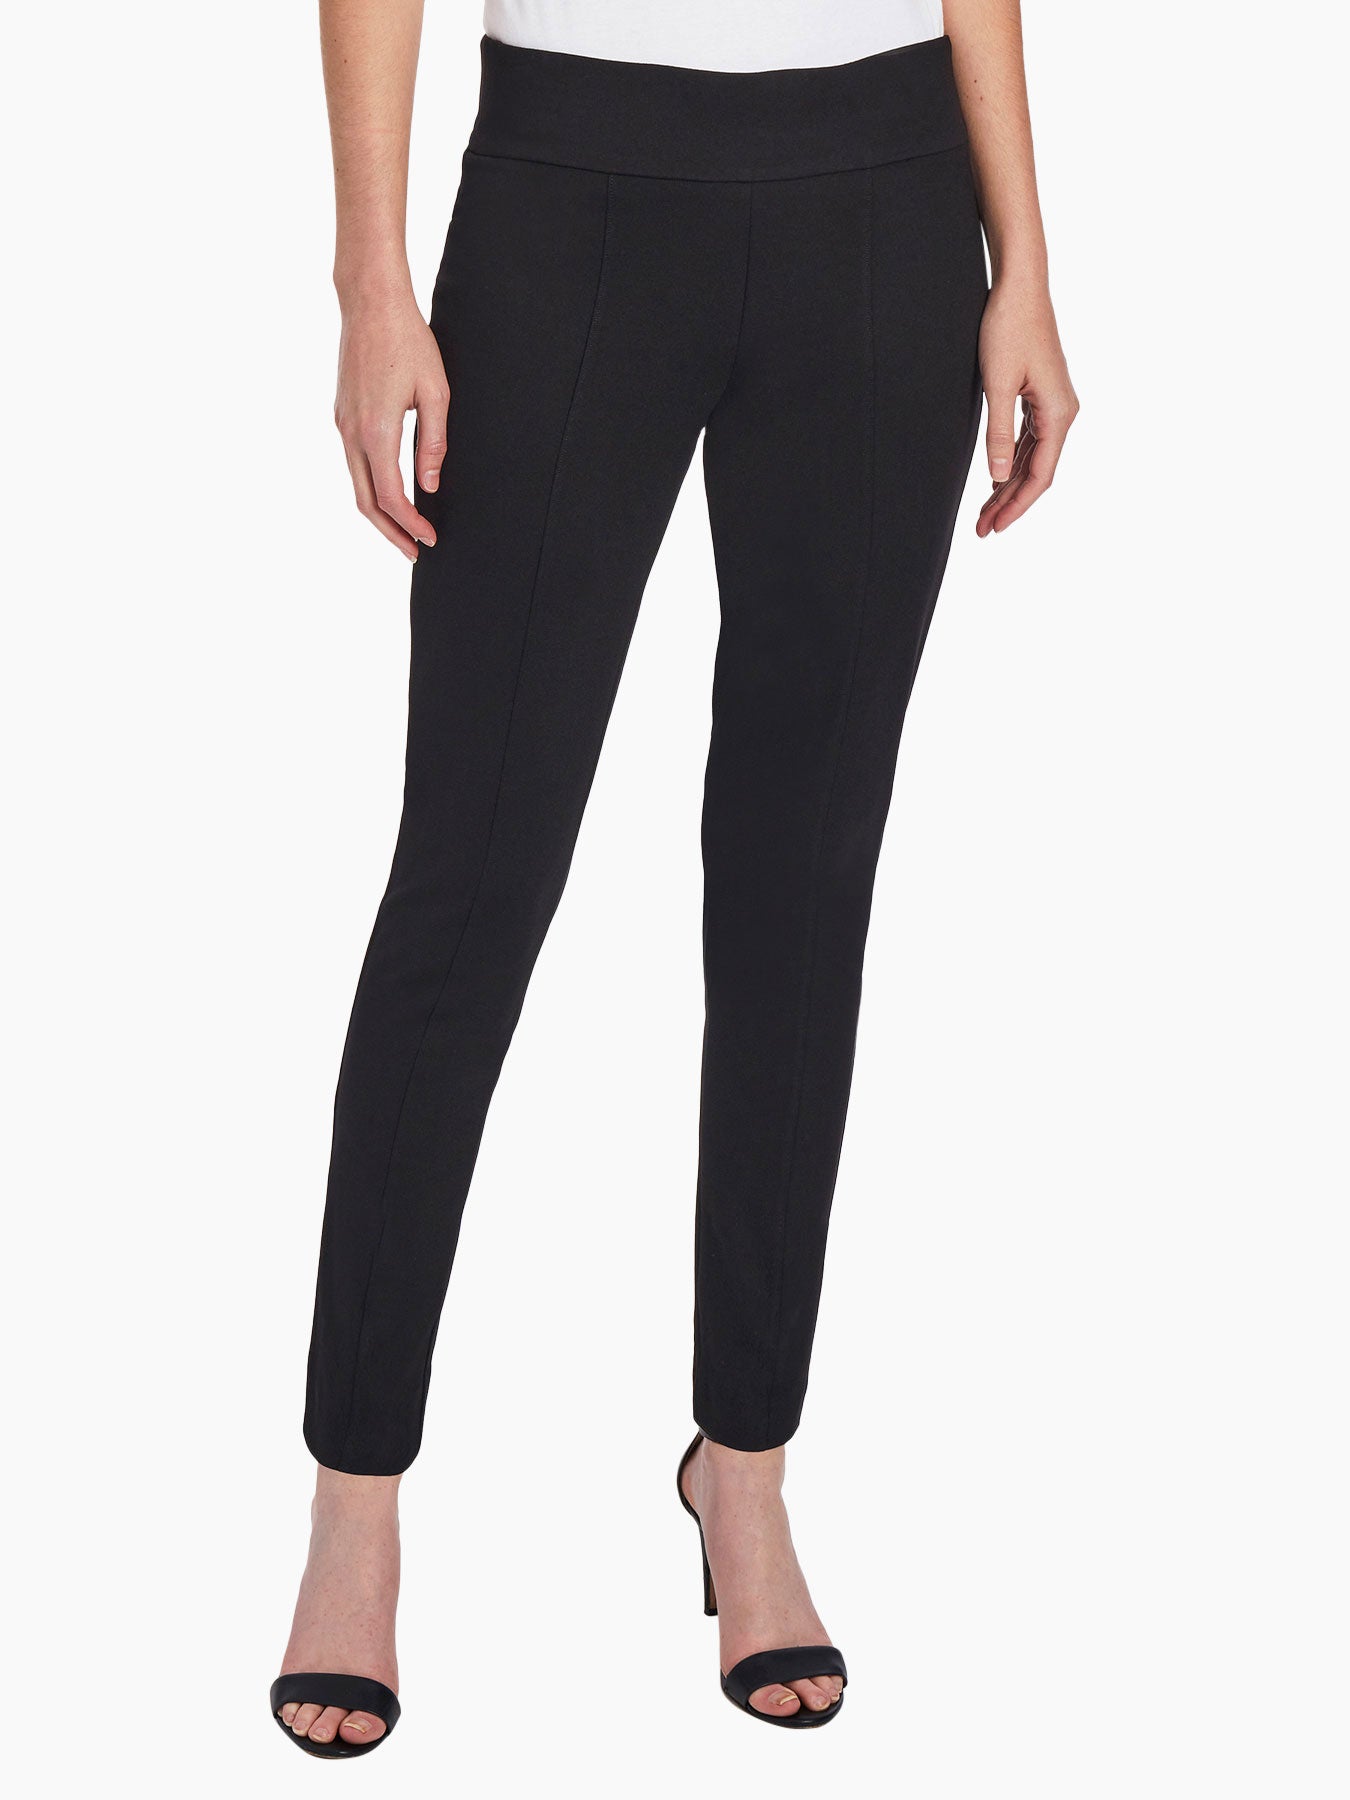 Platinum Legging - Front Pintuck Ponte Black  Plus size leggings, Fashion,  Curvy women fashion